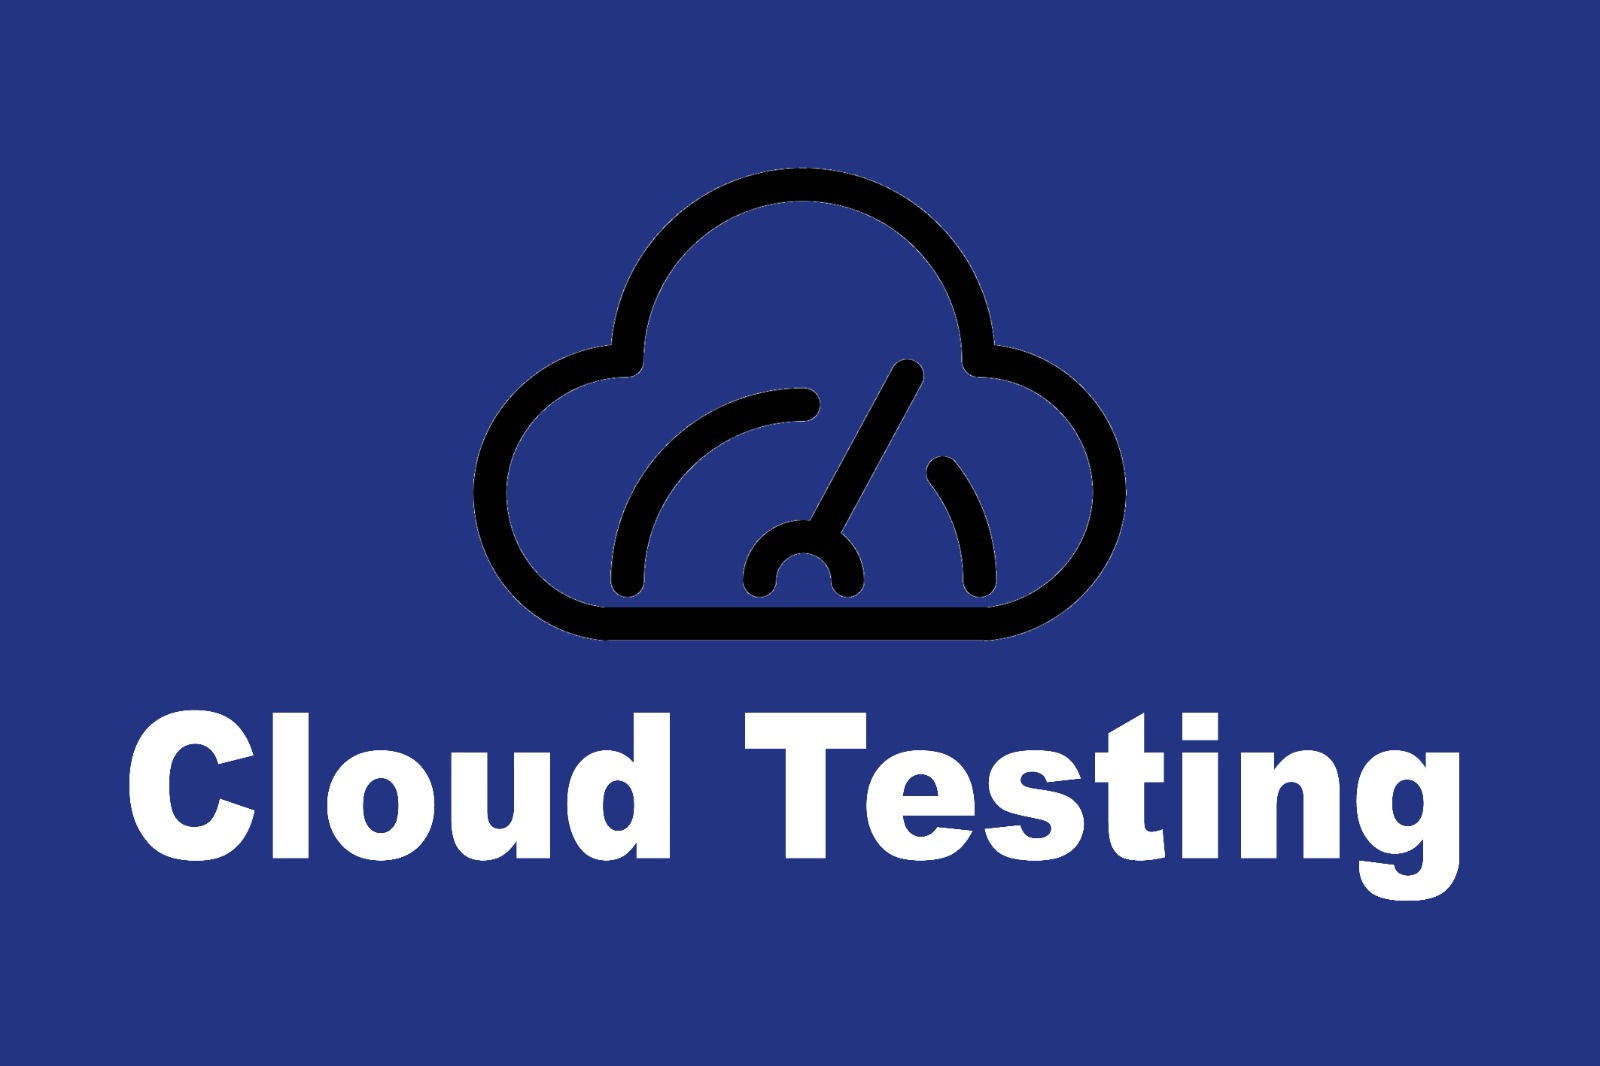 Cloud Testing training in hyderabad